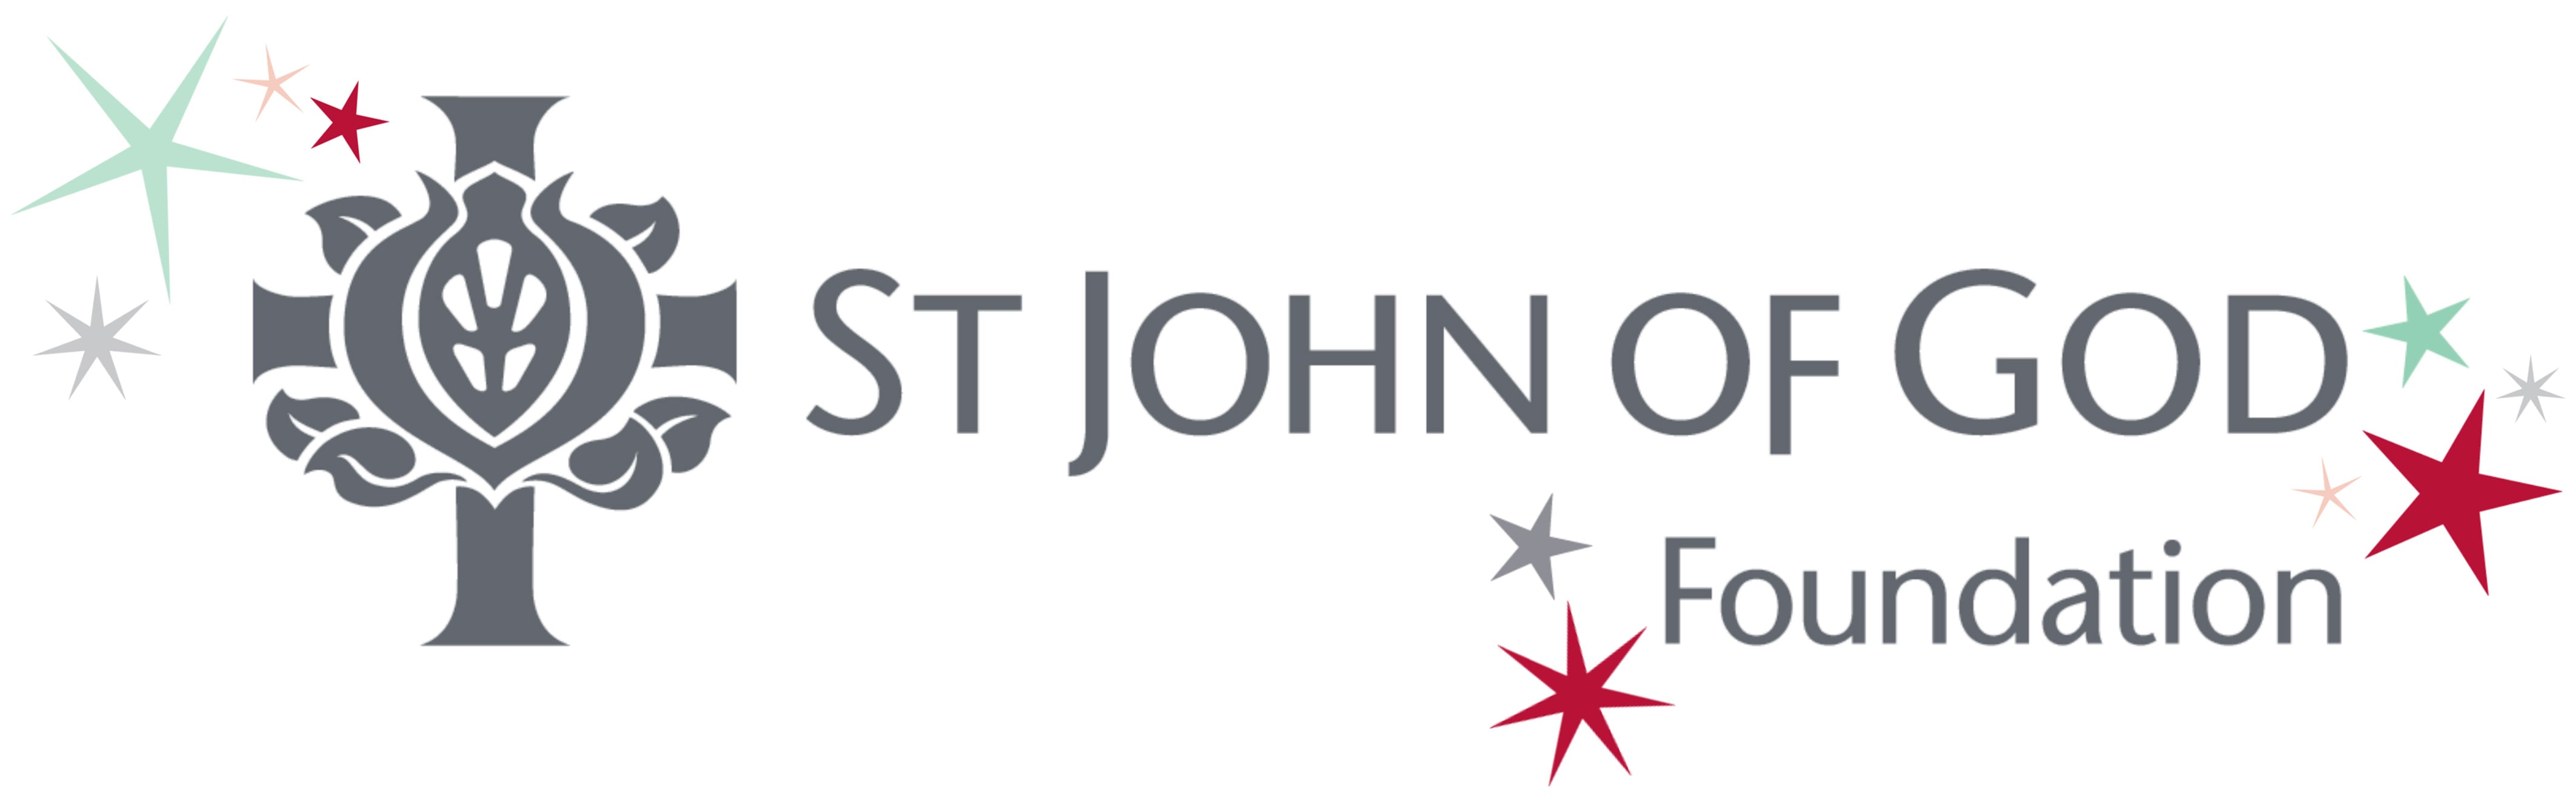 St John of God Foundation Christmas logo